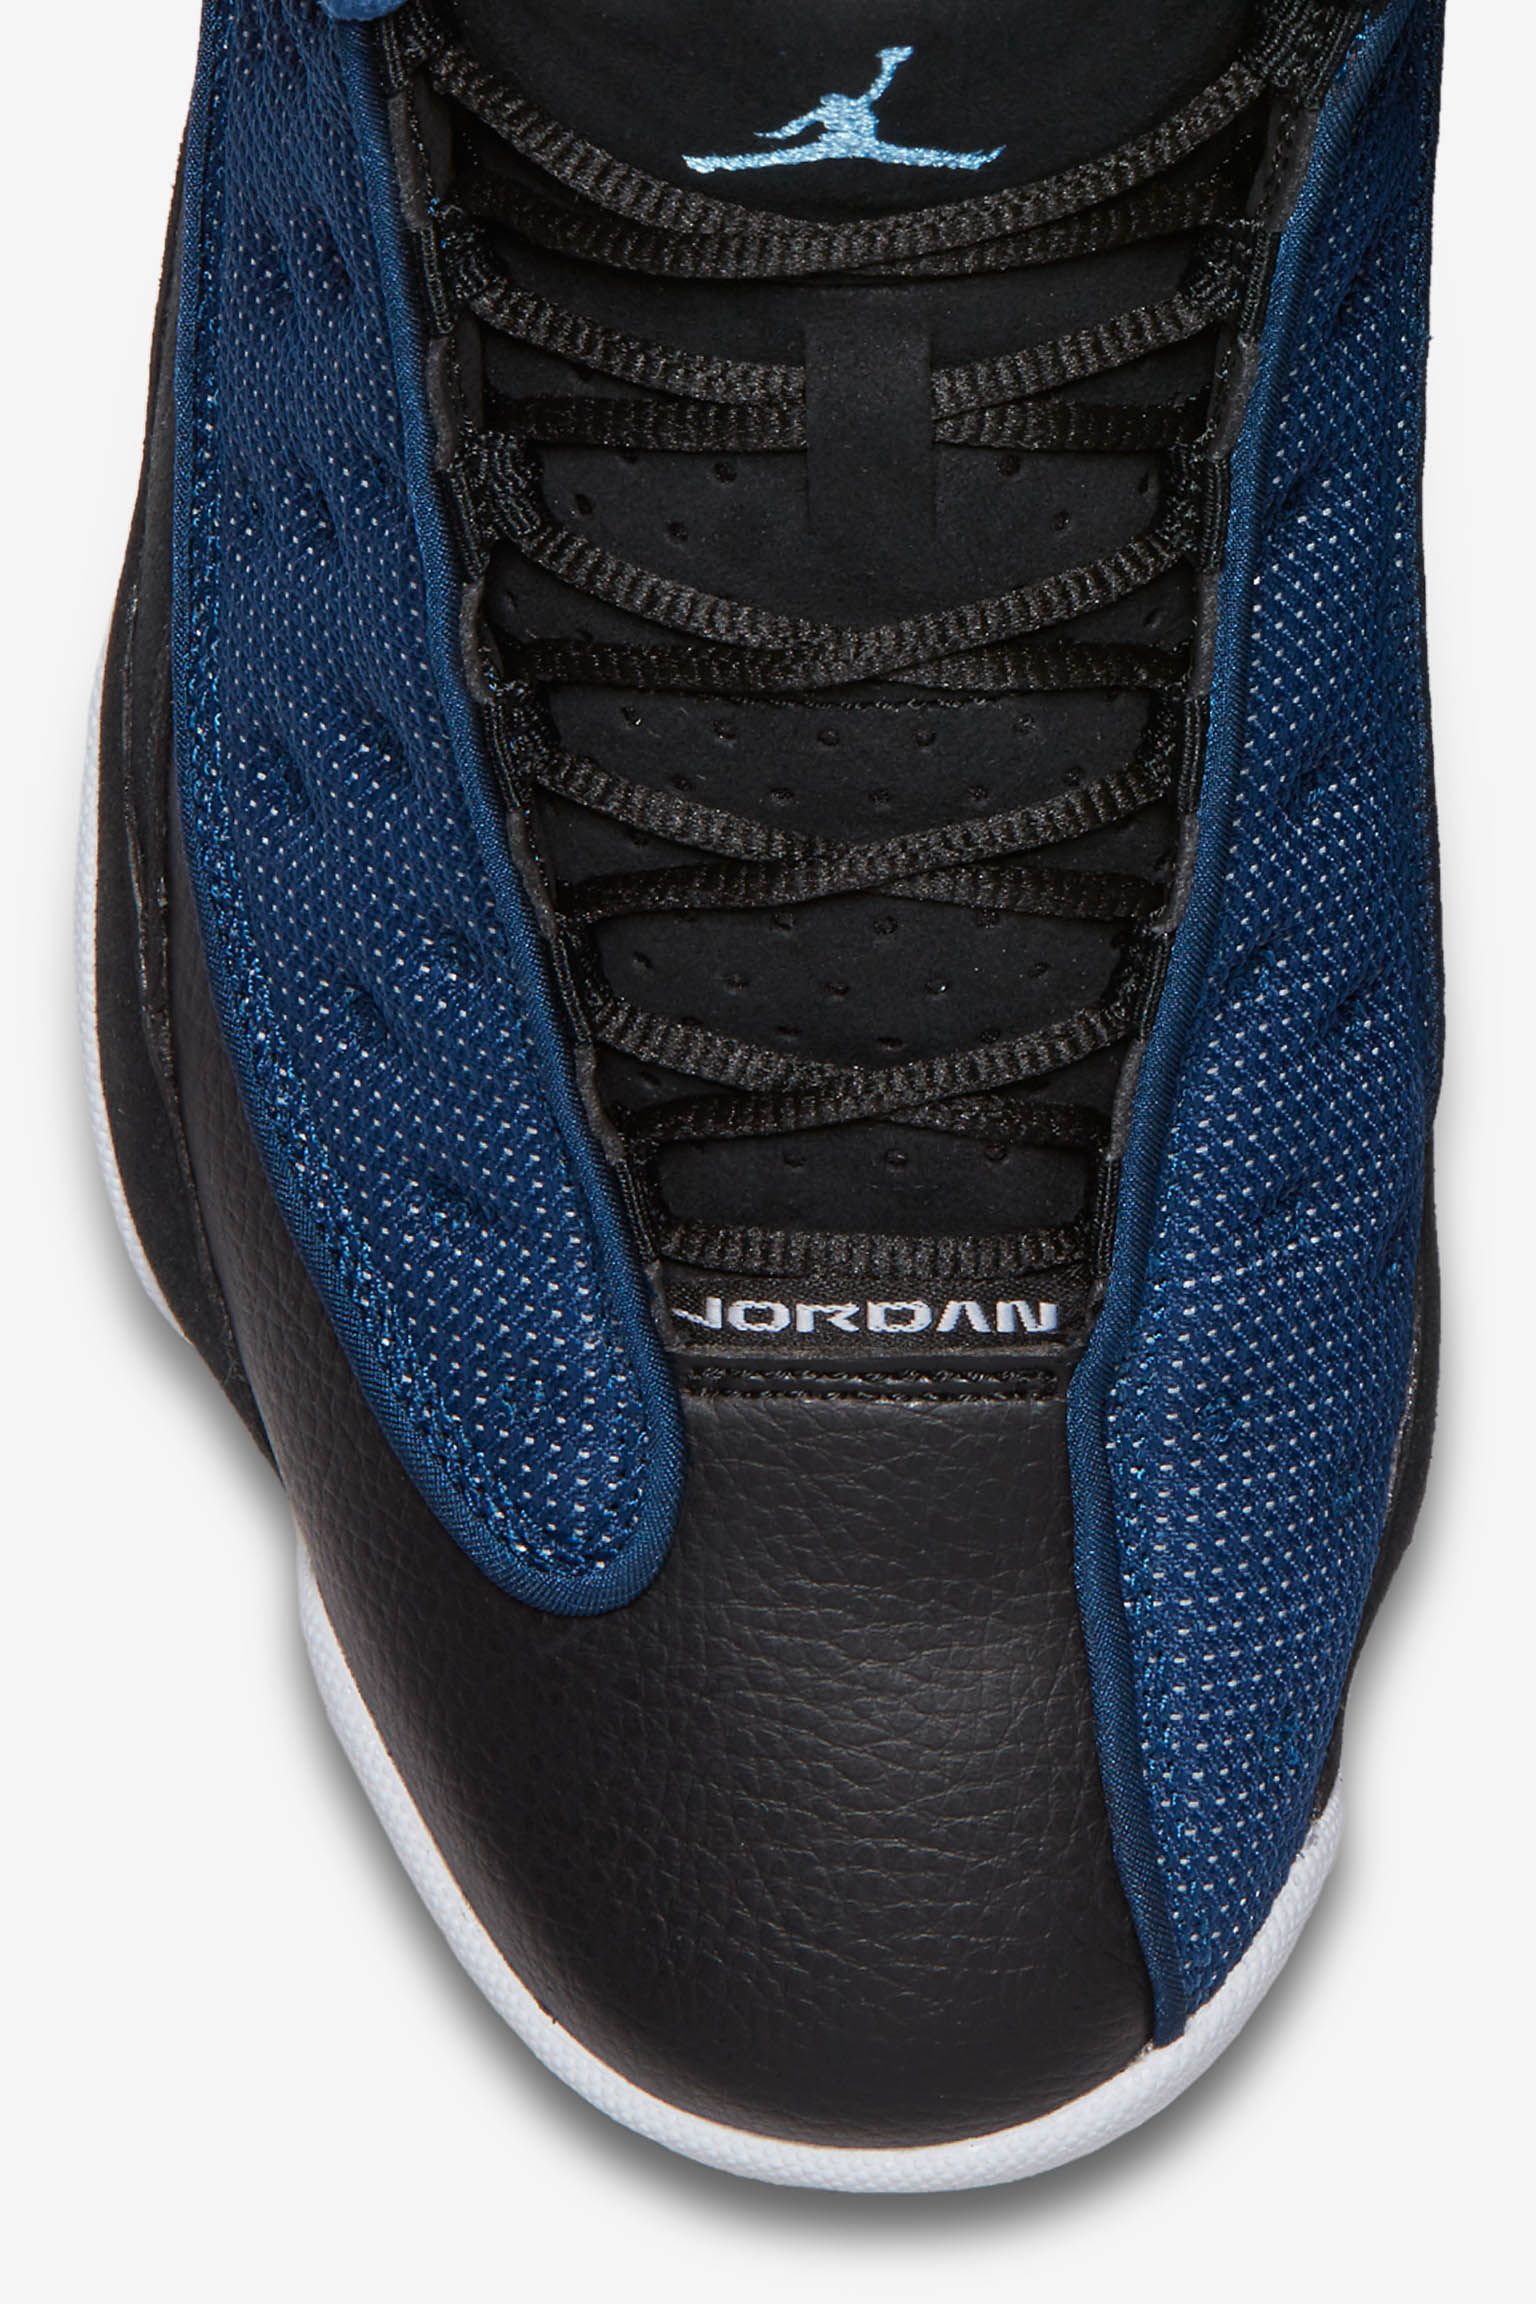 Air Jordan 13 Retro - 'Brave Blue